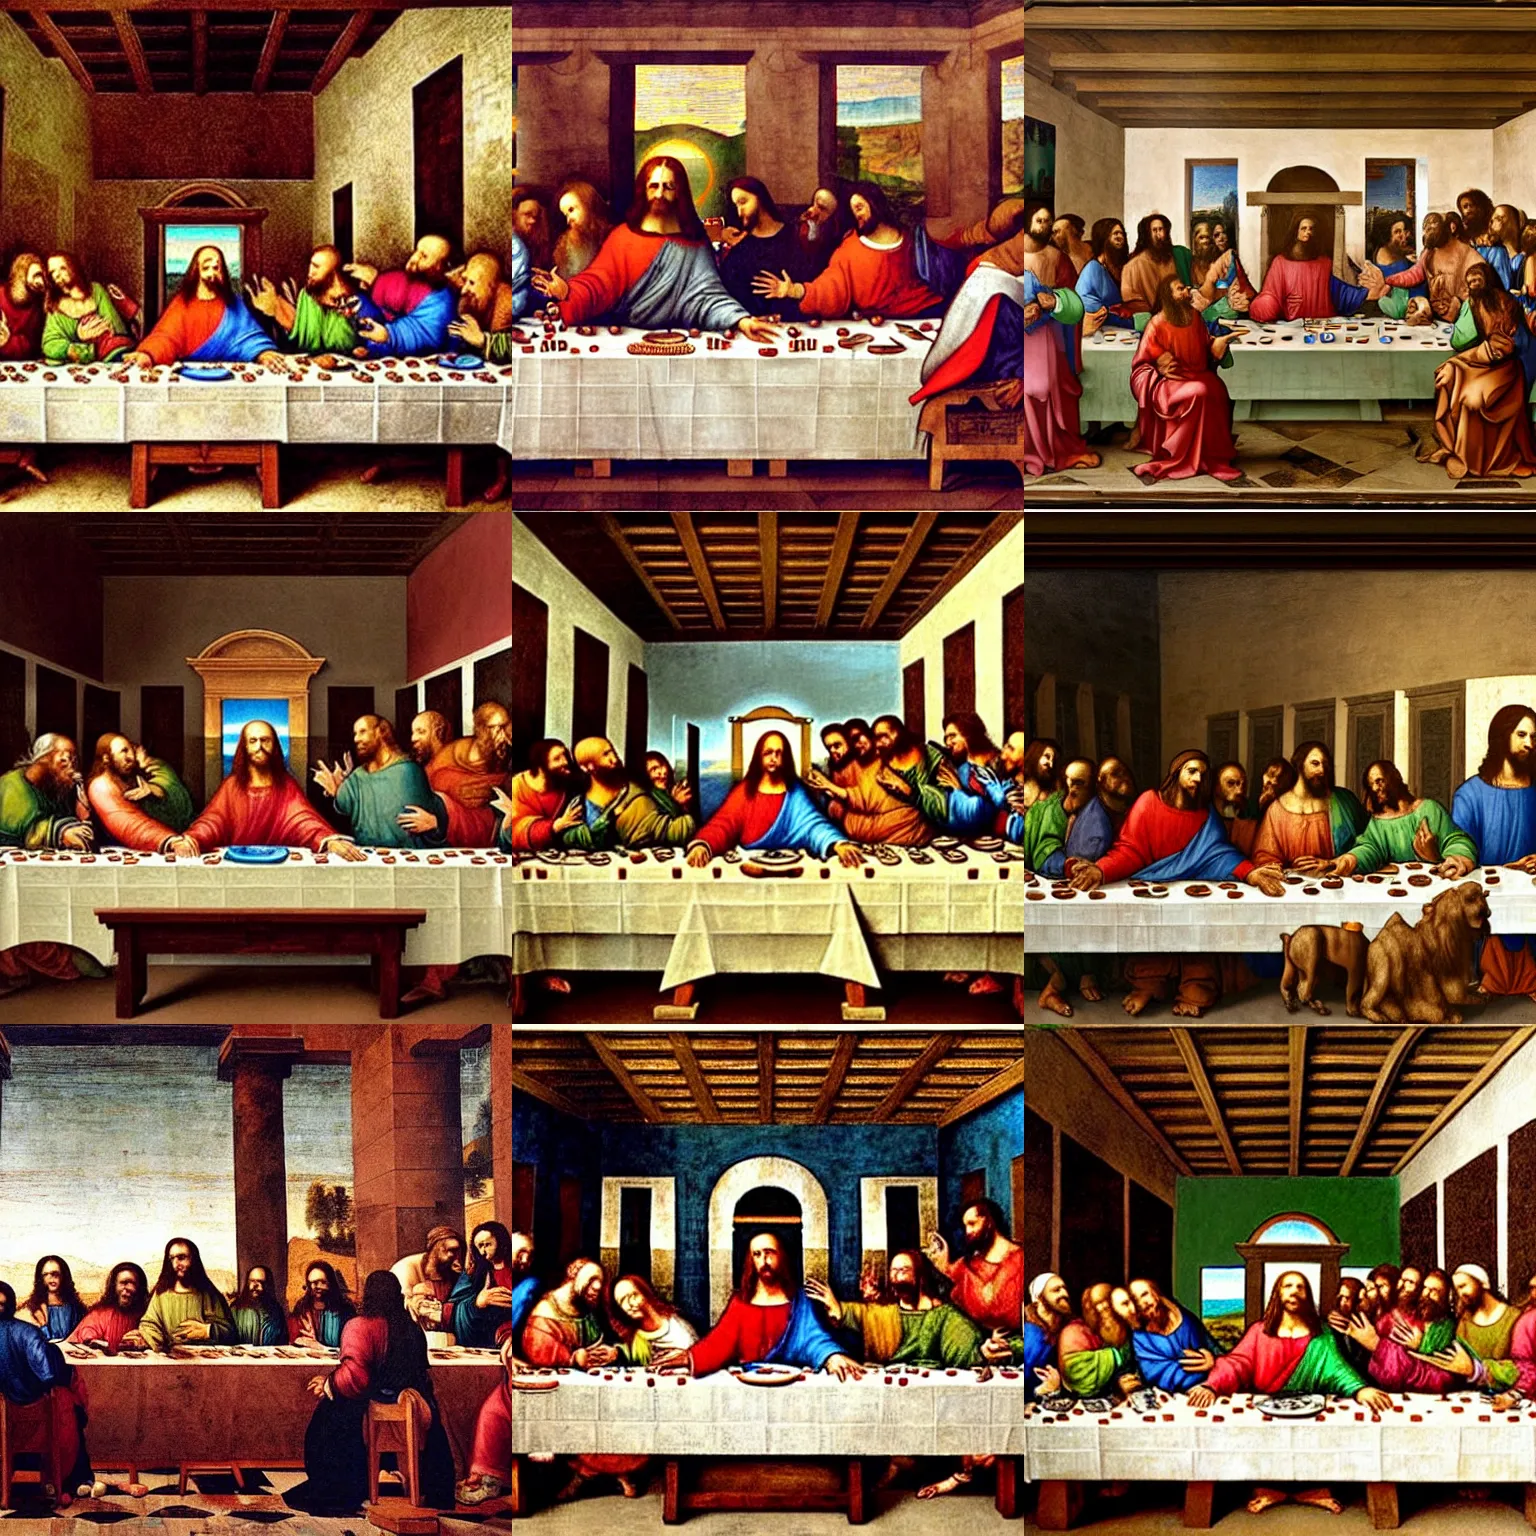 Prompt: last supper painting by leonardo da vinci, snoop dogg is jesus